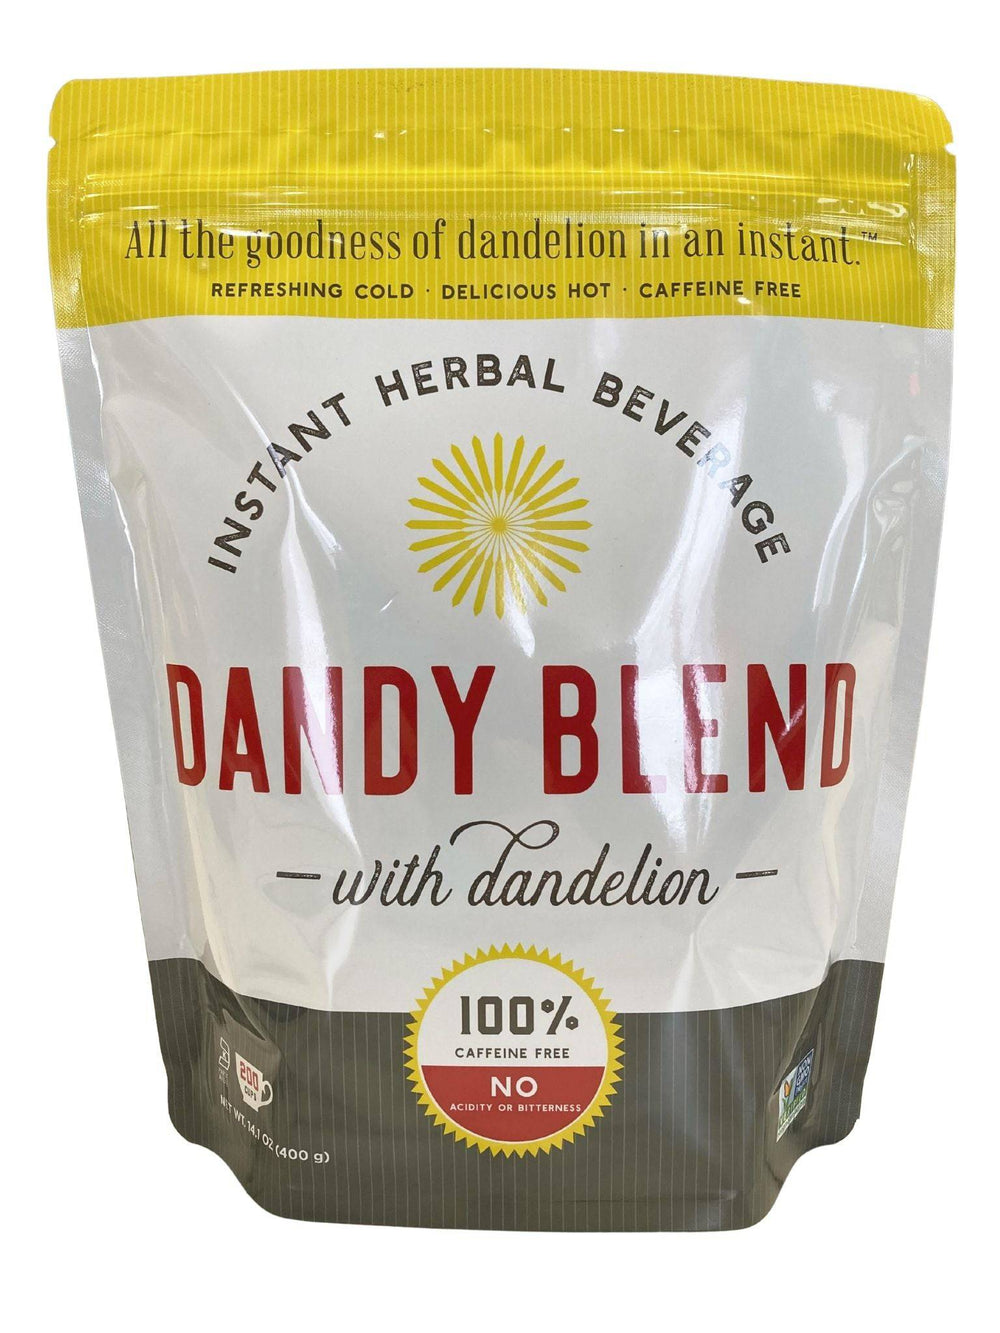 Dandy Blend Instant Herbal Beverage With Dandelion Caffeine Free